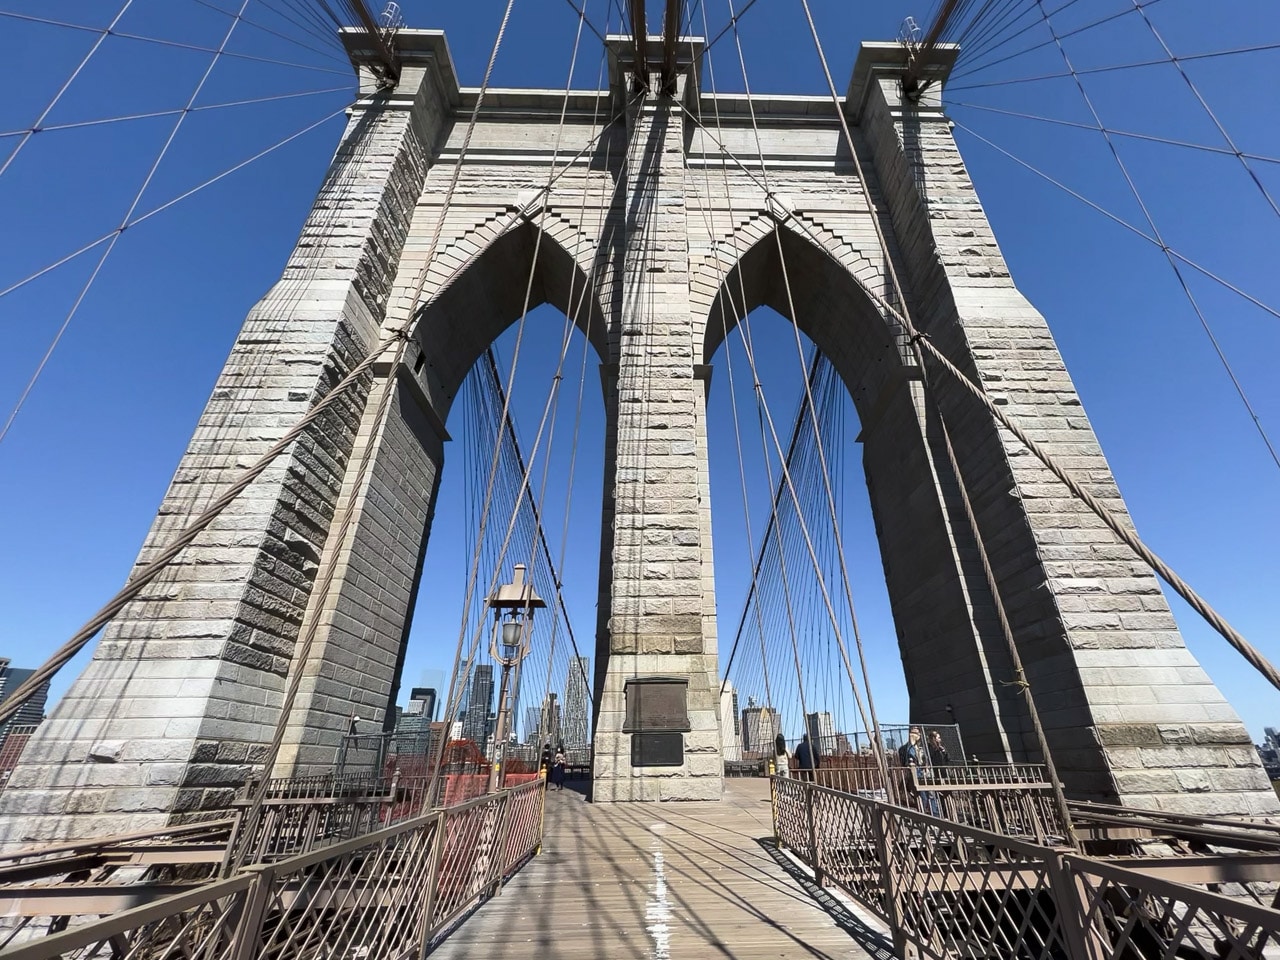 Brooklyn Heights, Dumbo and The Bridge